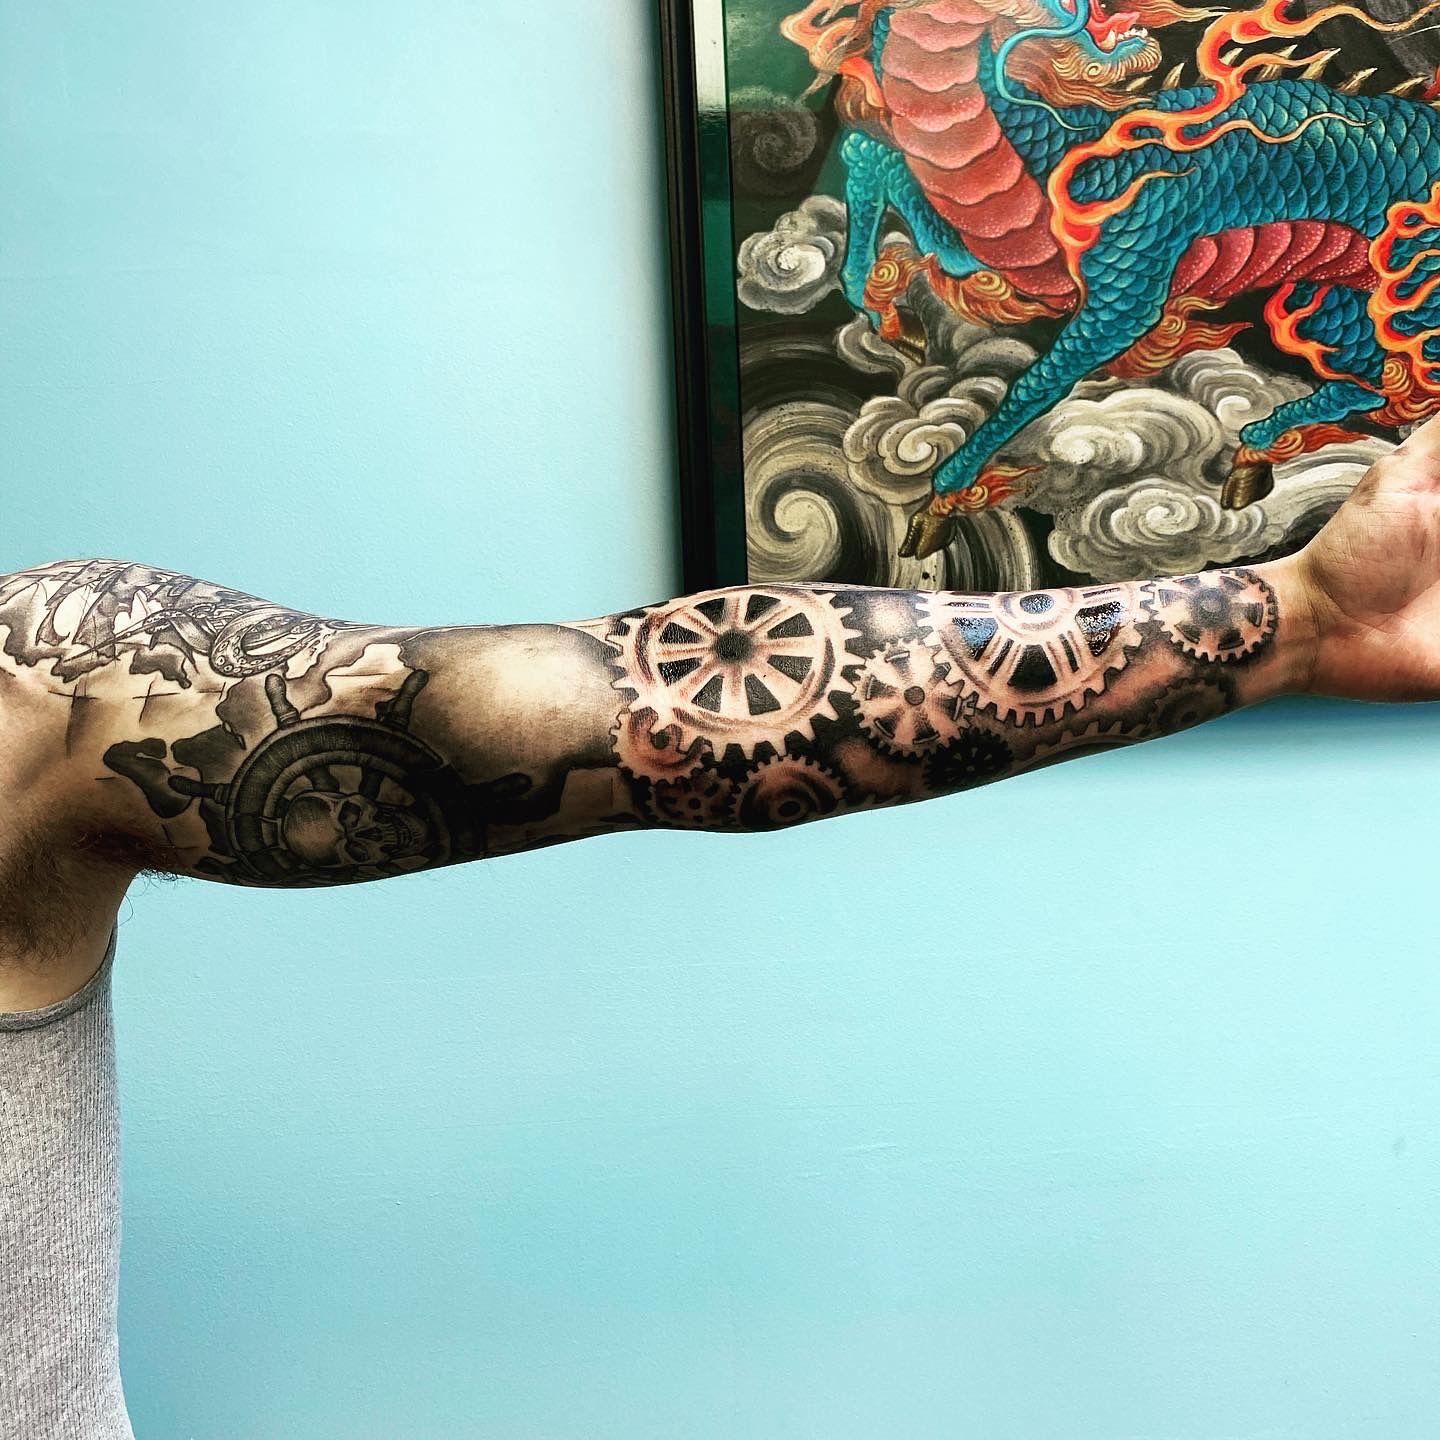 Armband Tattoo with Trishul design | Band tattoo designs, Tattoo design for  hand, Arm band tattoo